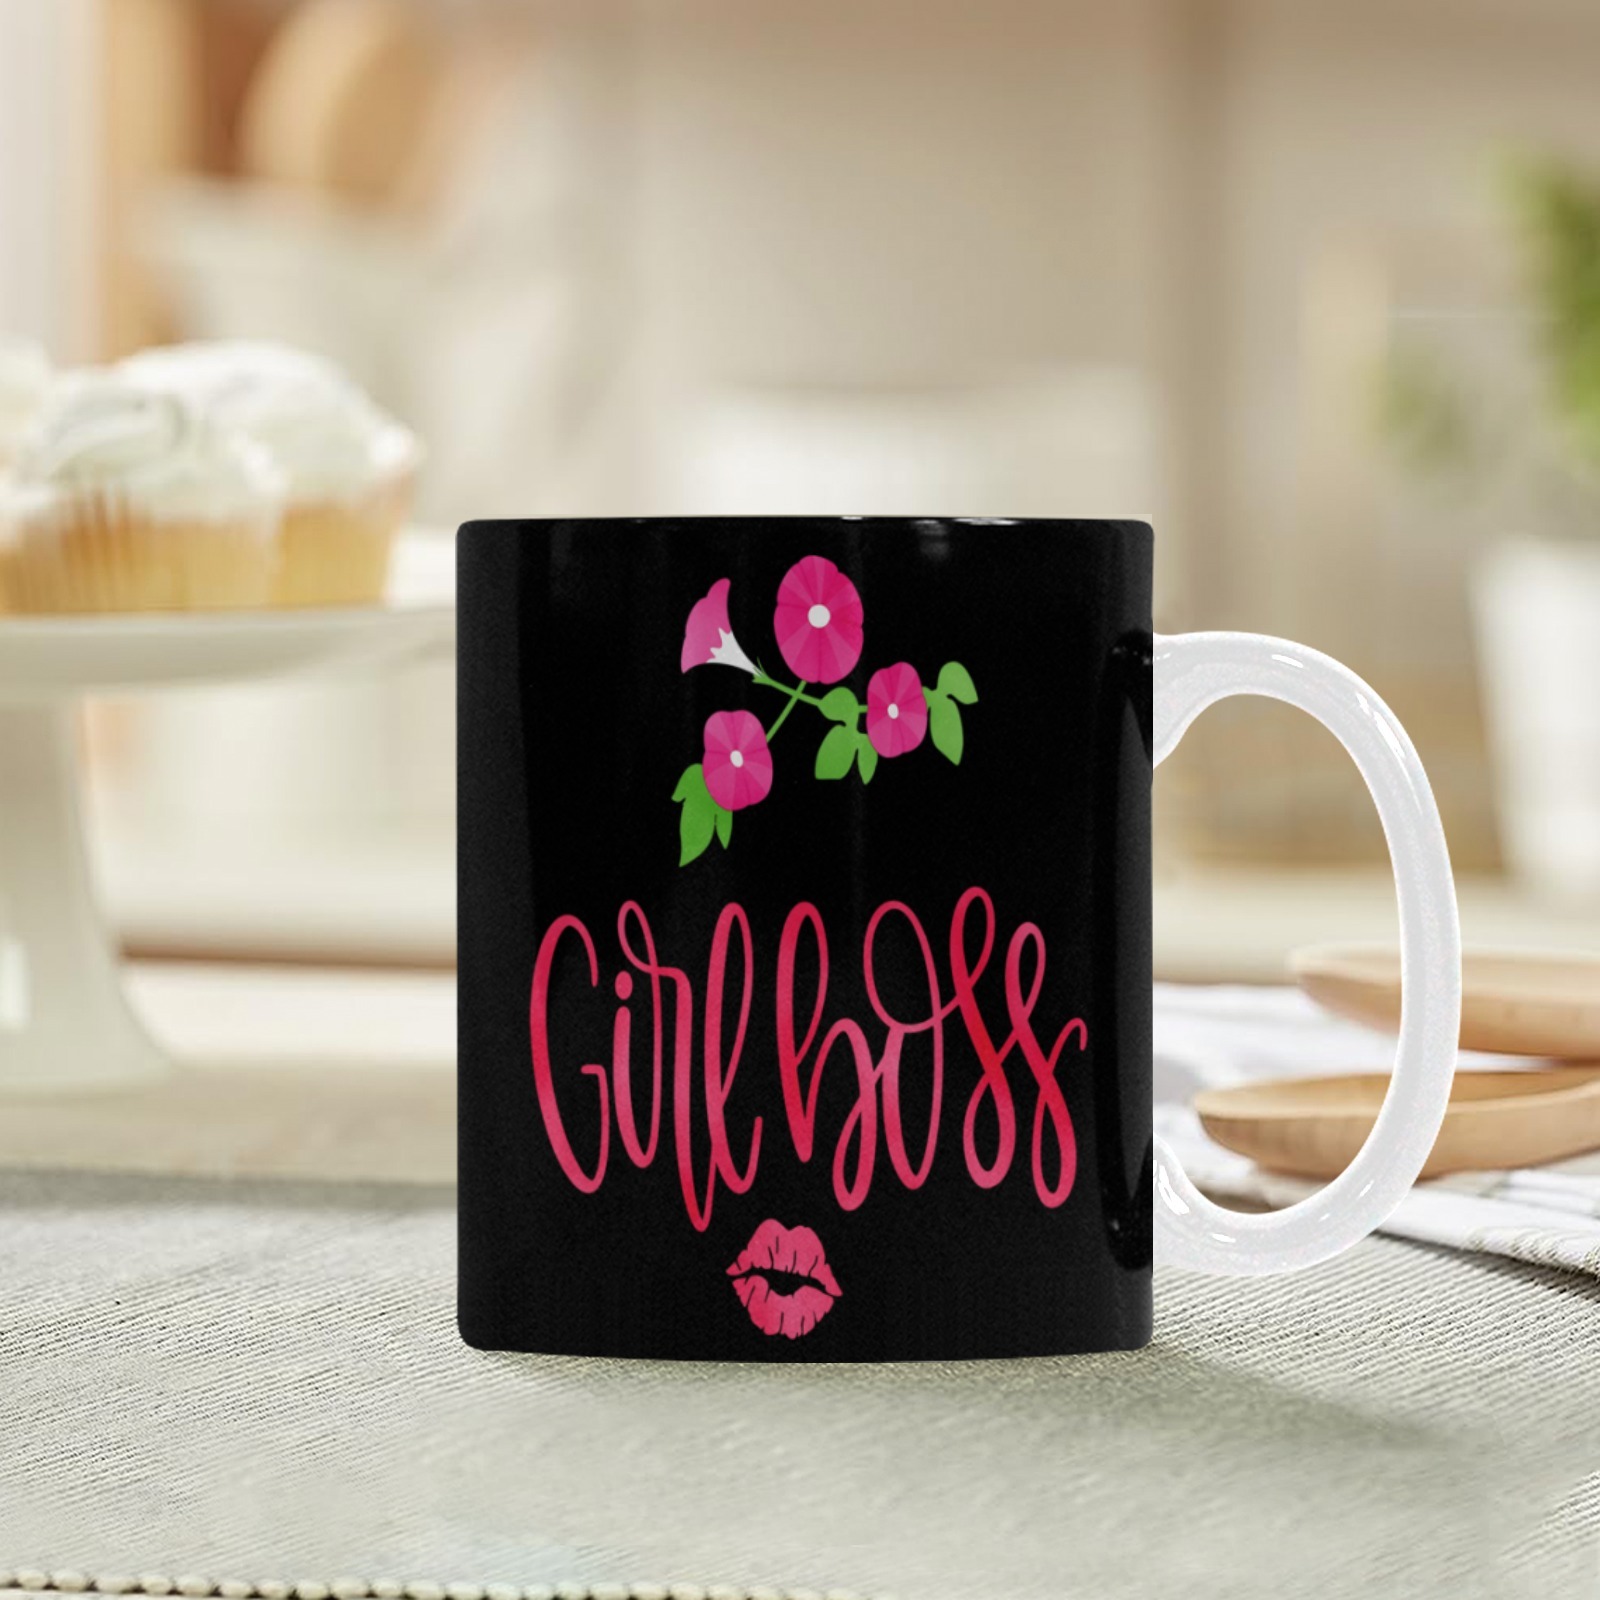 Primary image for Ceramic Mug – 11 oz – Women's Day Gift - Girl Boss Black Classic Coffee Mug